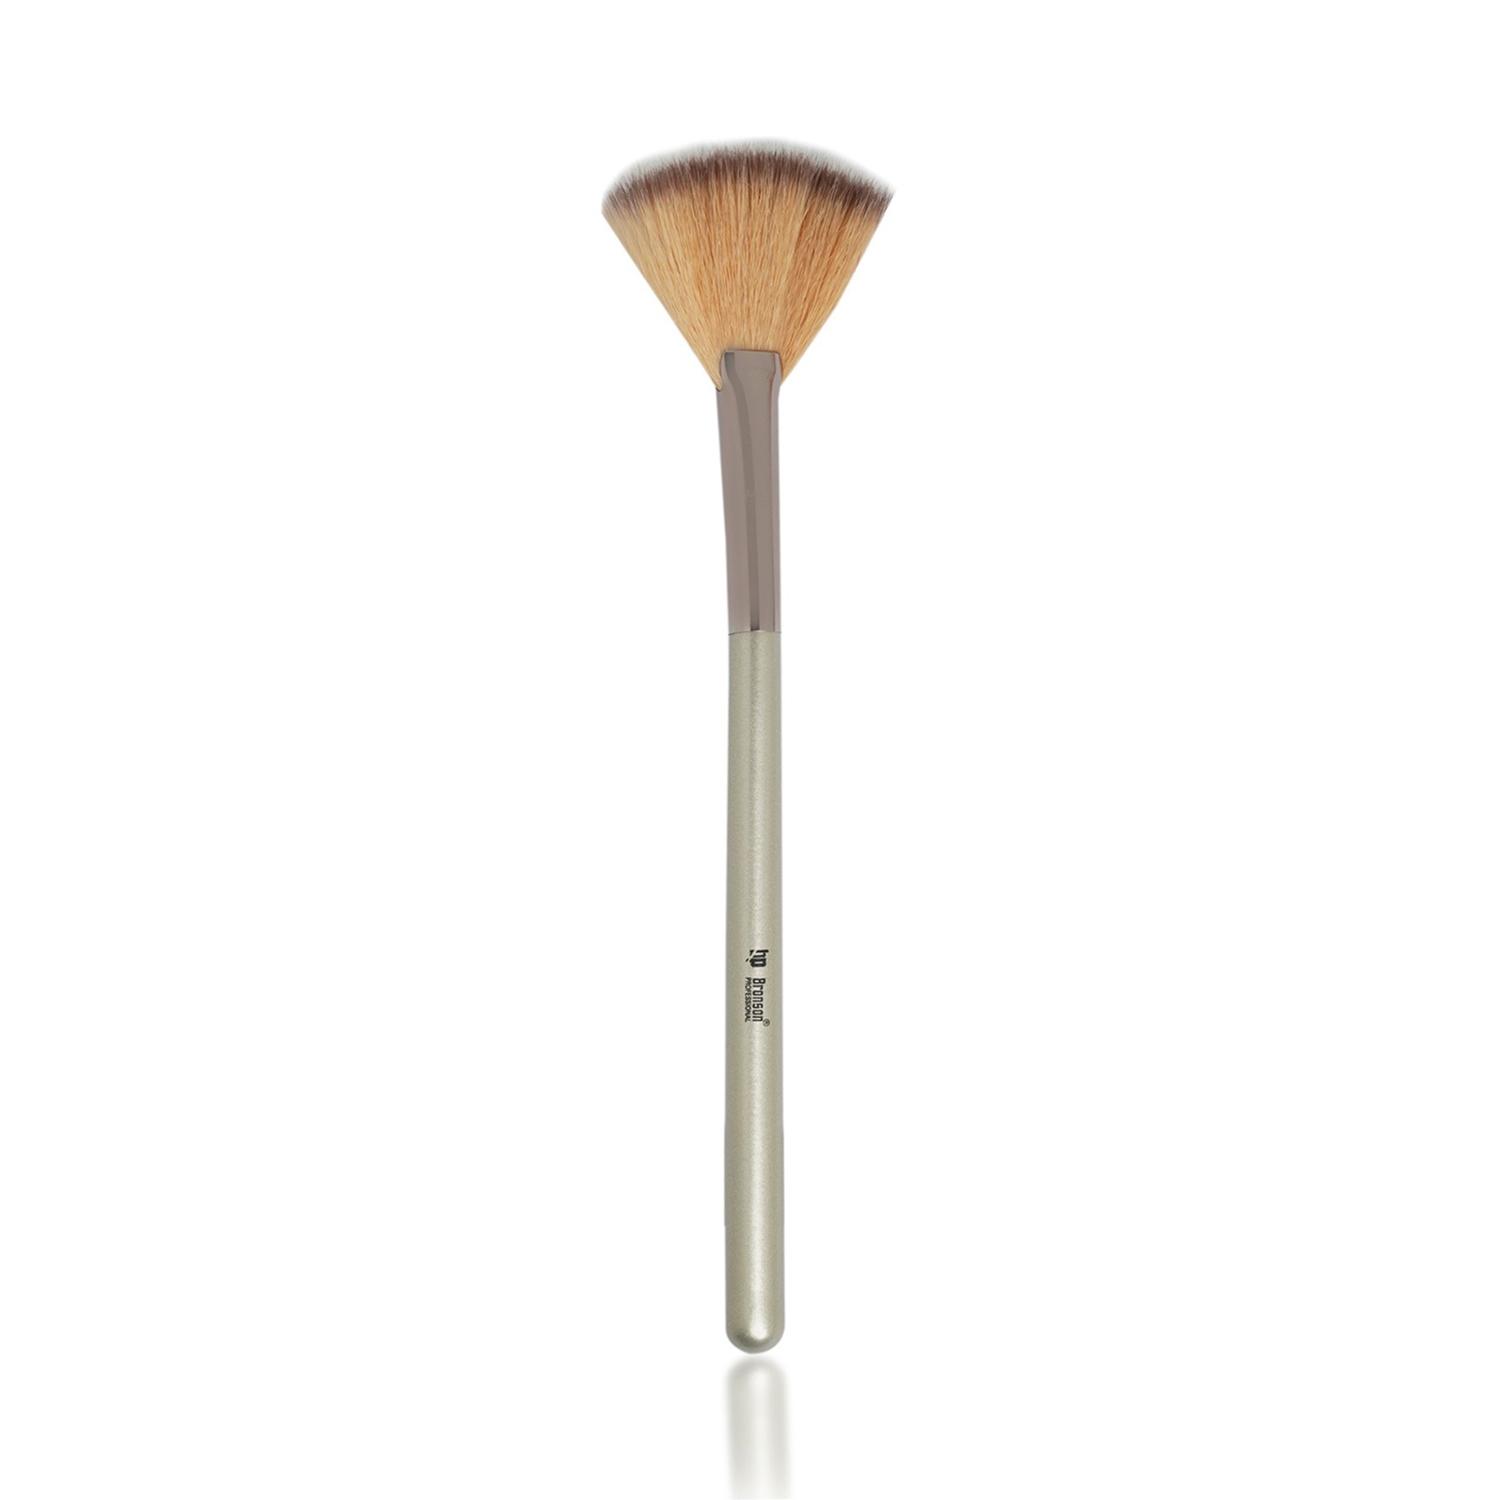 Bronson Professional Classic Fan Makeup Brush - Silver, Pink